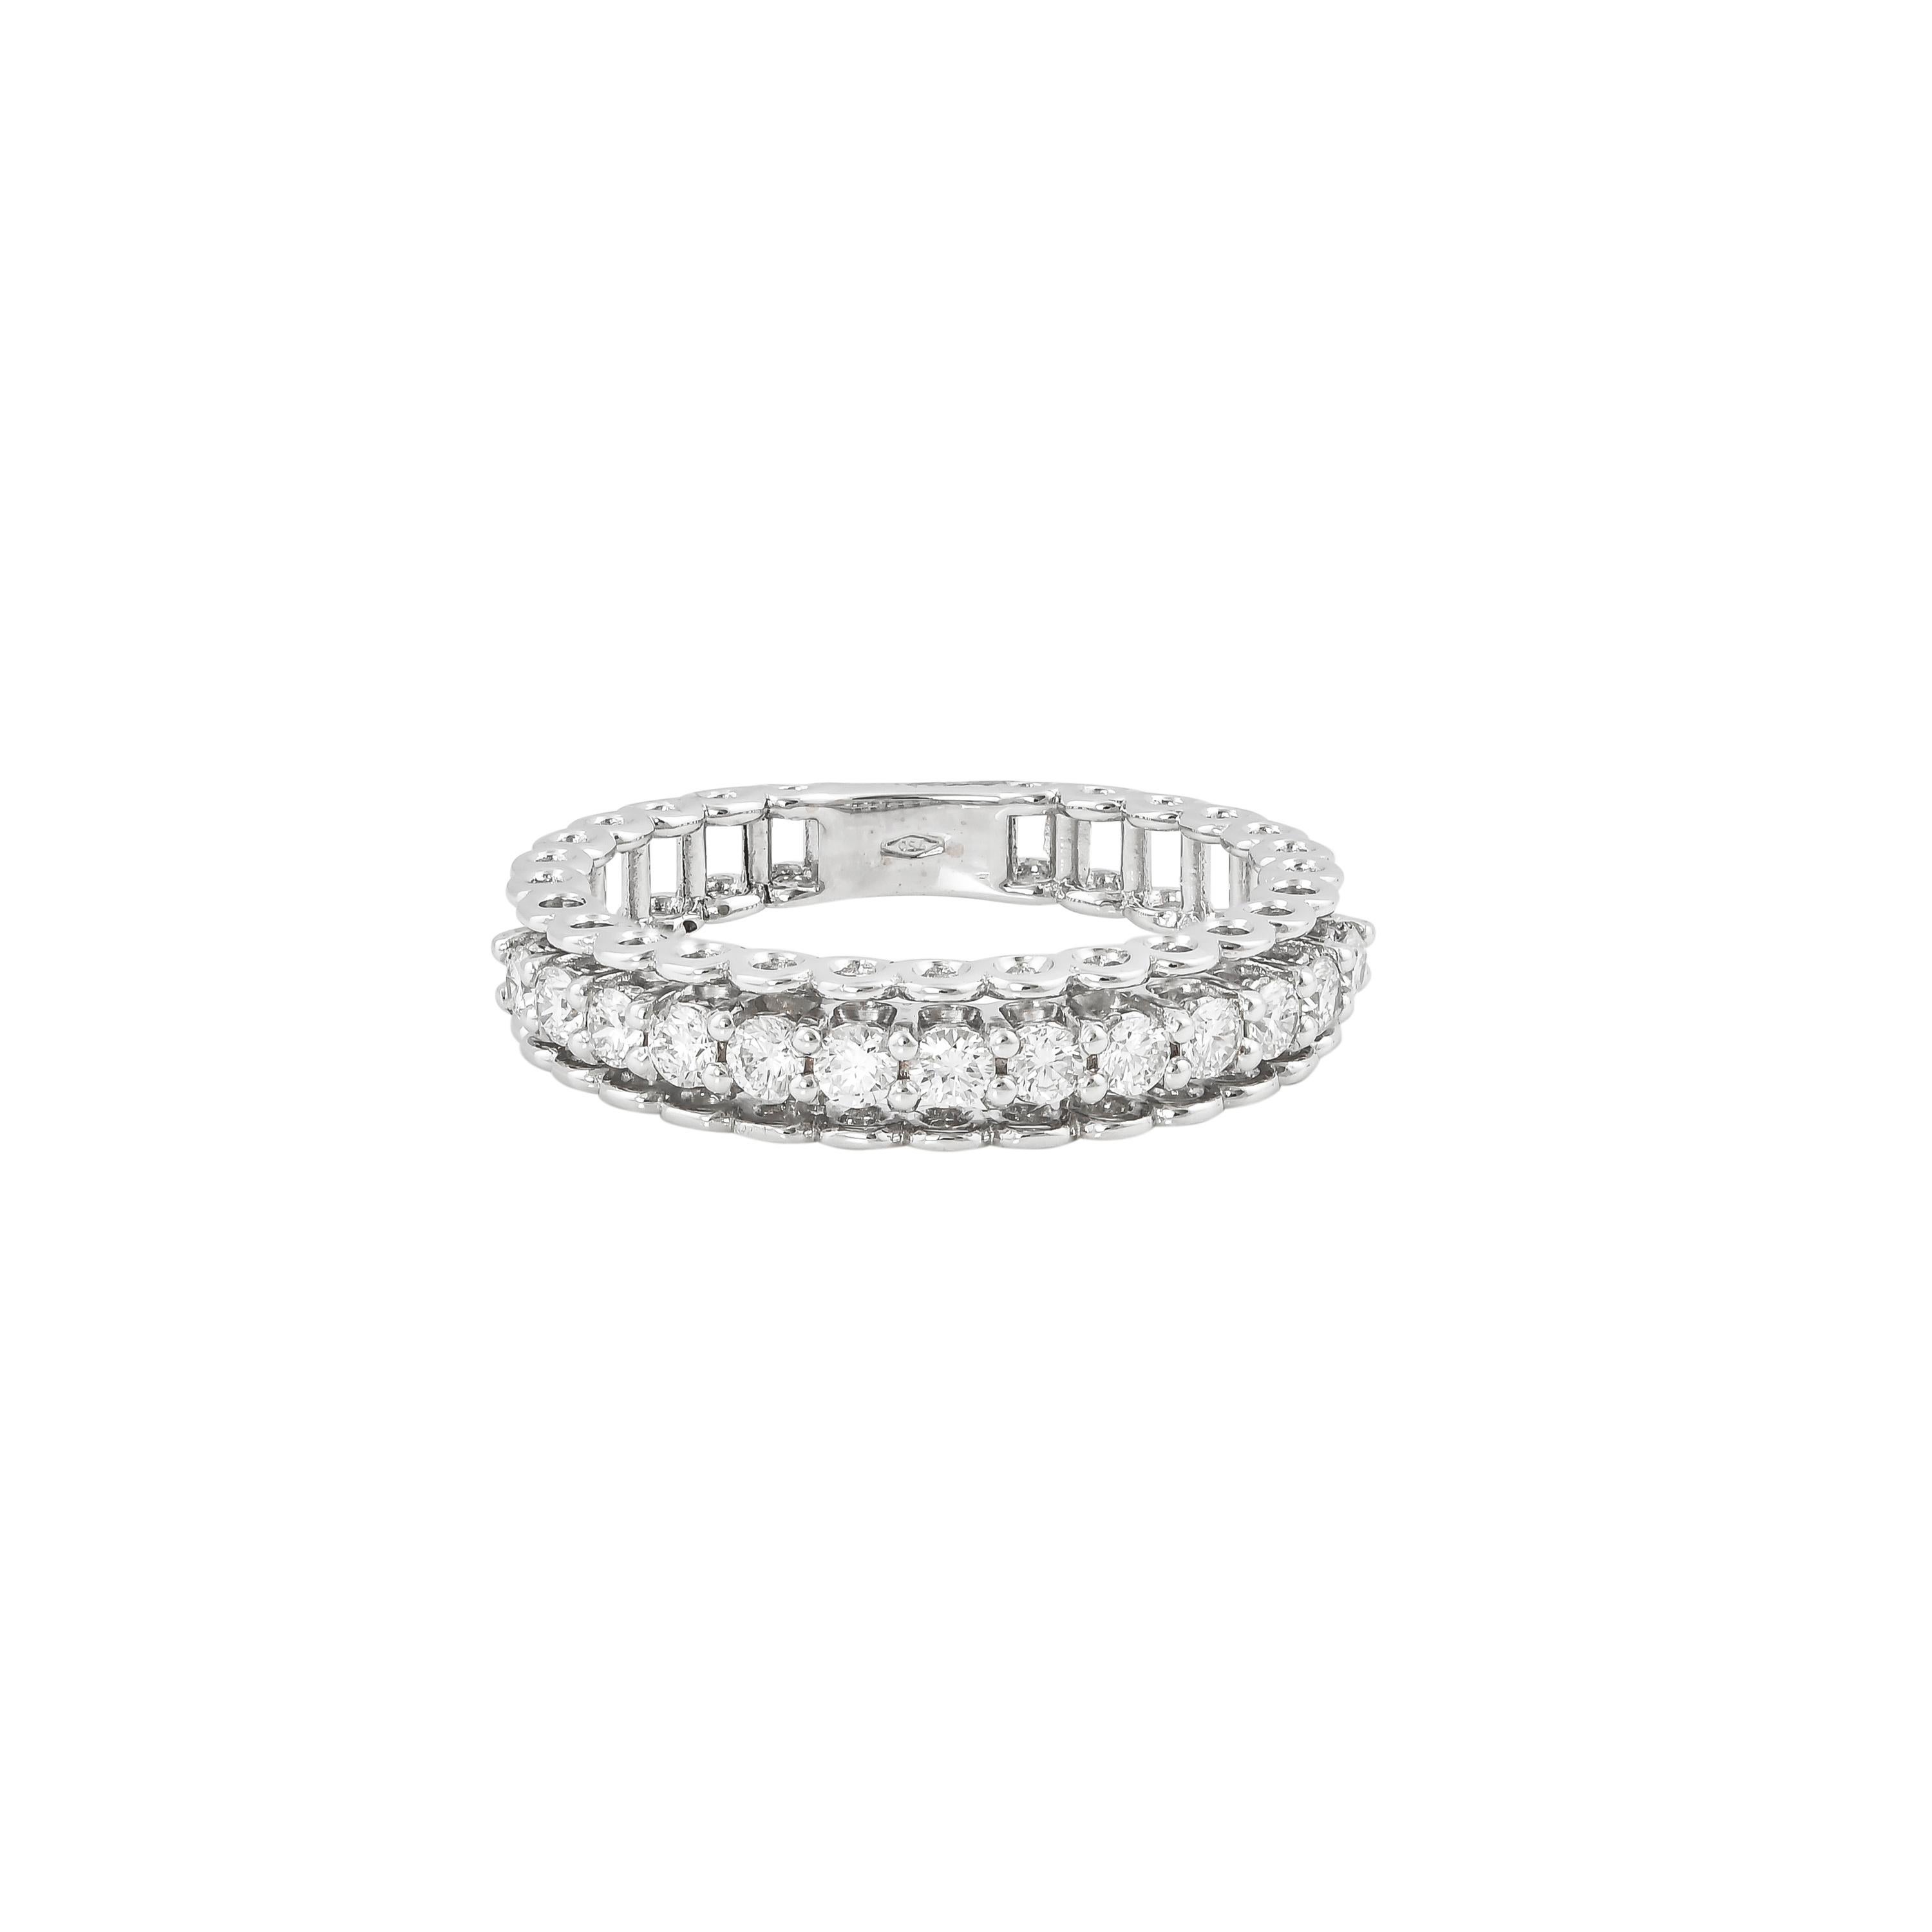 Round Cut 0.541 Carat GVS Diamond Band Ring in 18 Karat White Gold For Sale